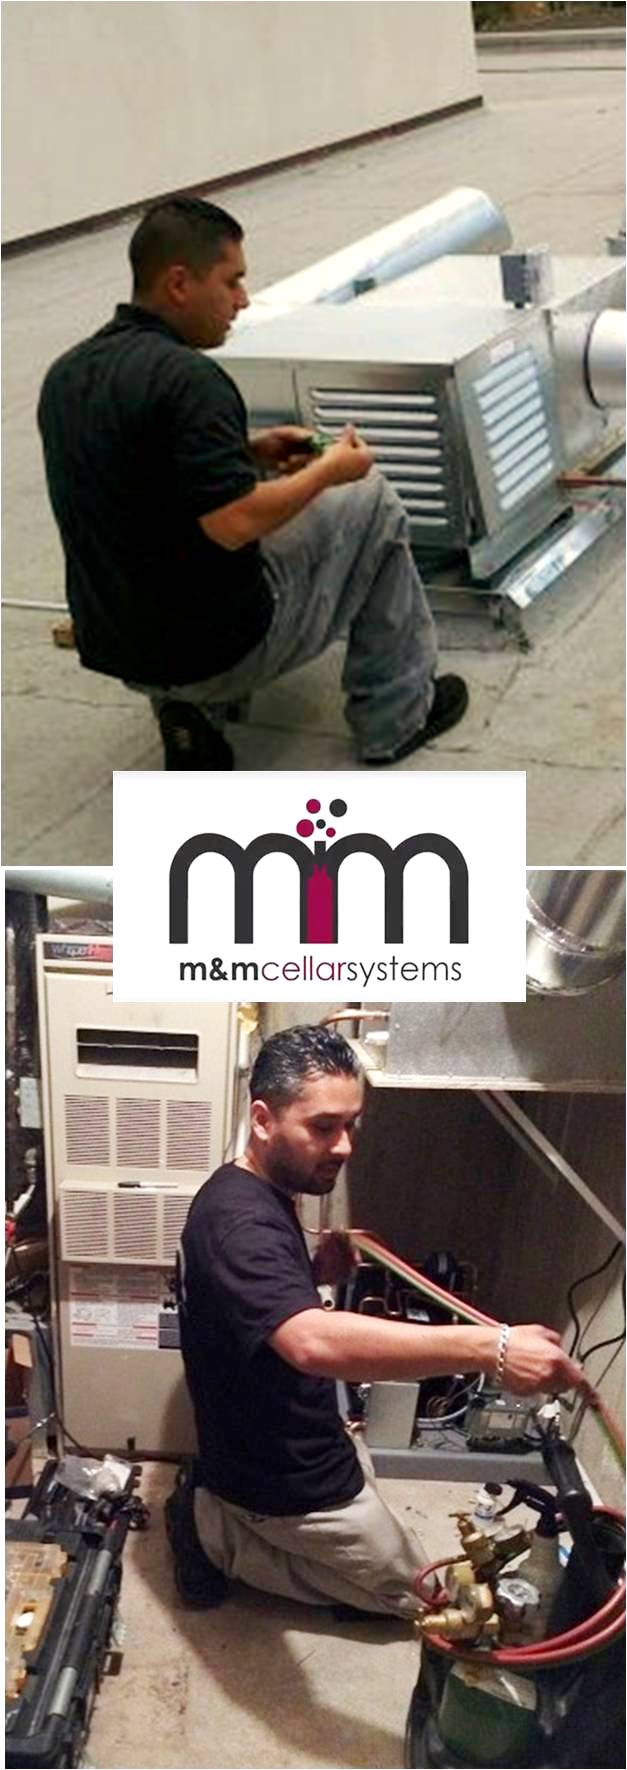 Mario Morales M&M Cellar Systems Refrigeration Expert in Orange County